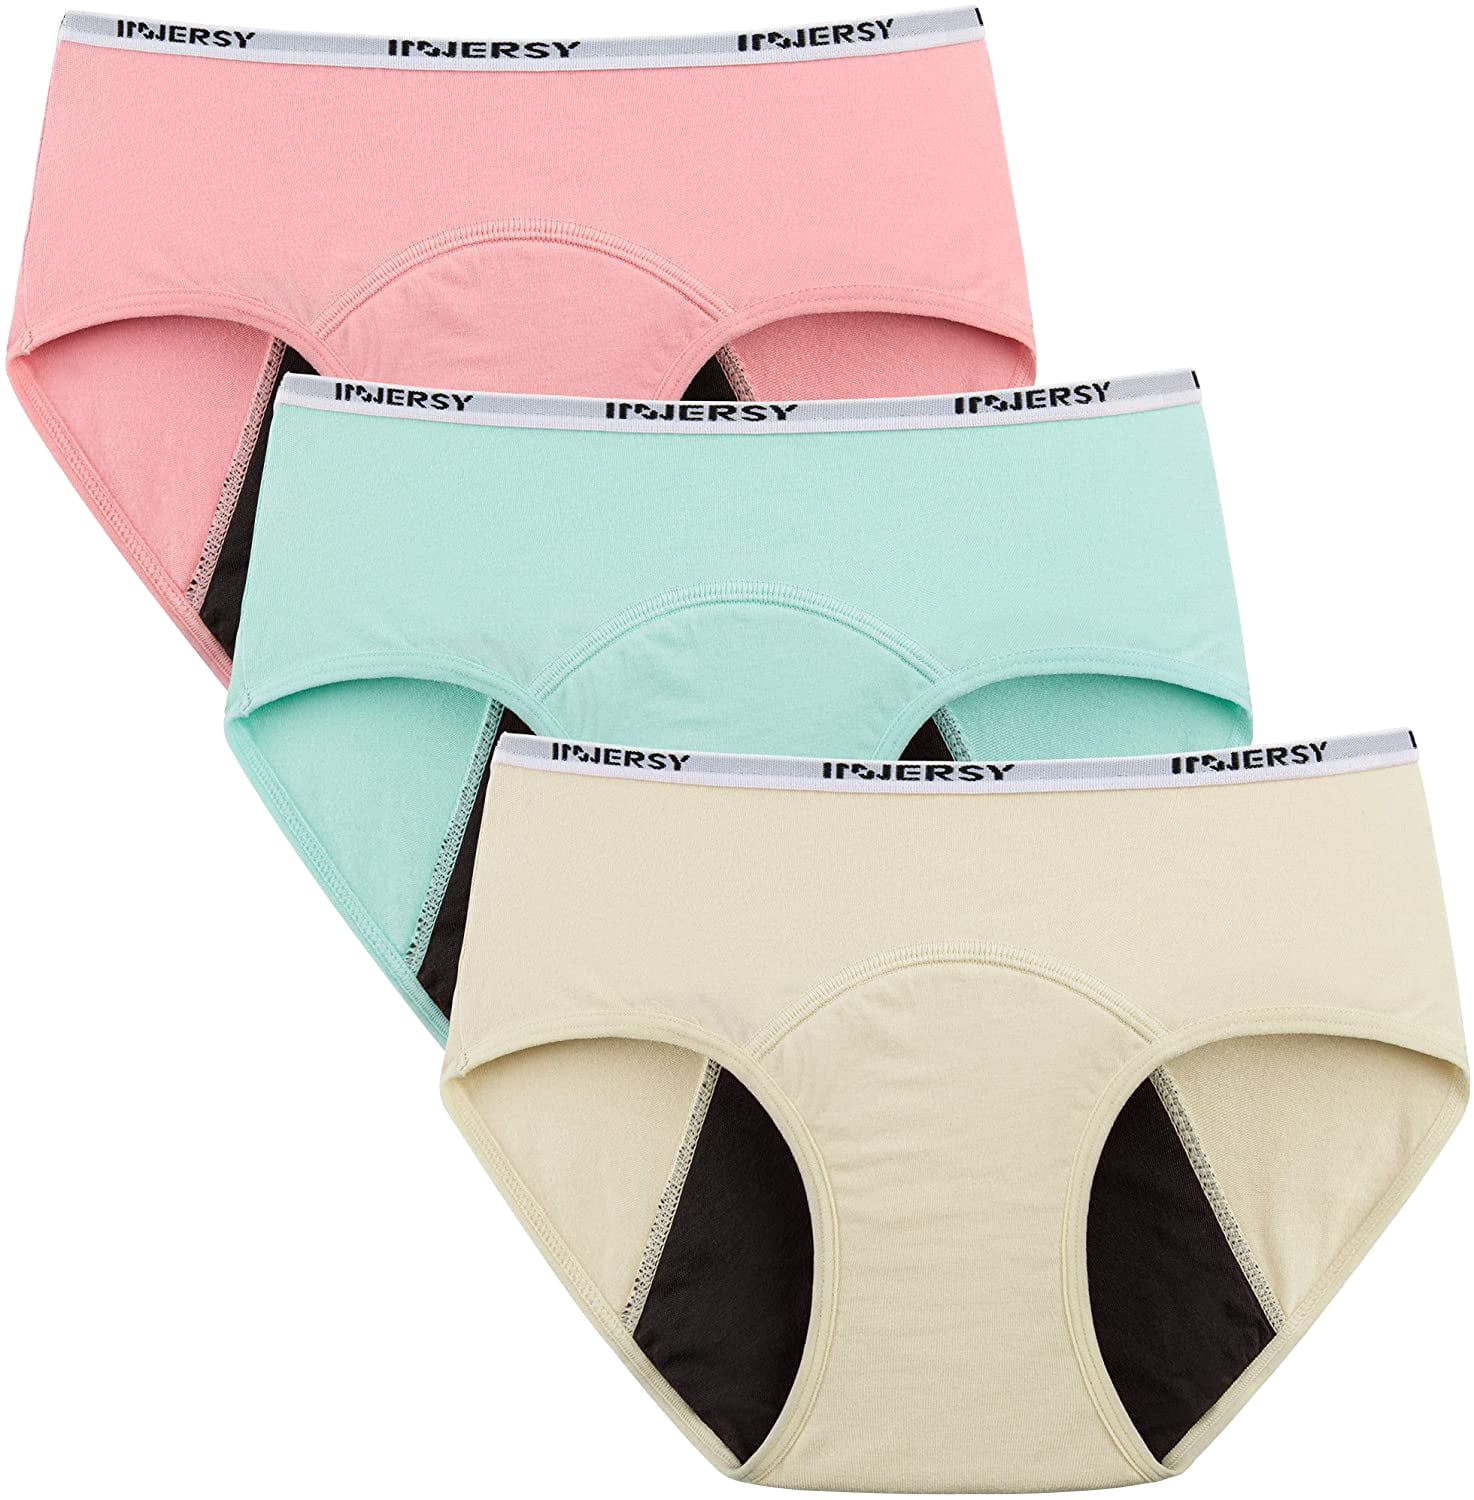 INNERSY Big Girls' Period Panties Cotton Menstrual Underwear For Teens  3-Pack (S(8-10 yrs), Beige/Pink/Green)